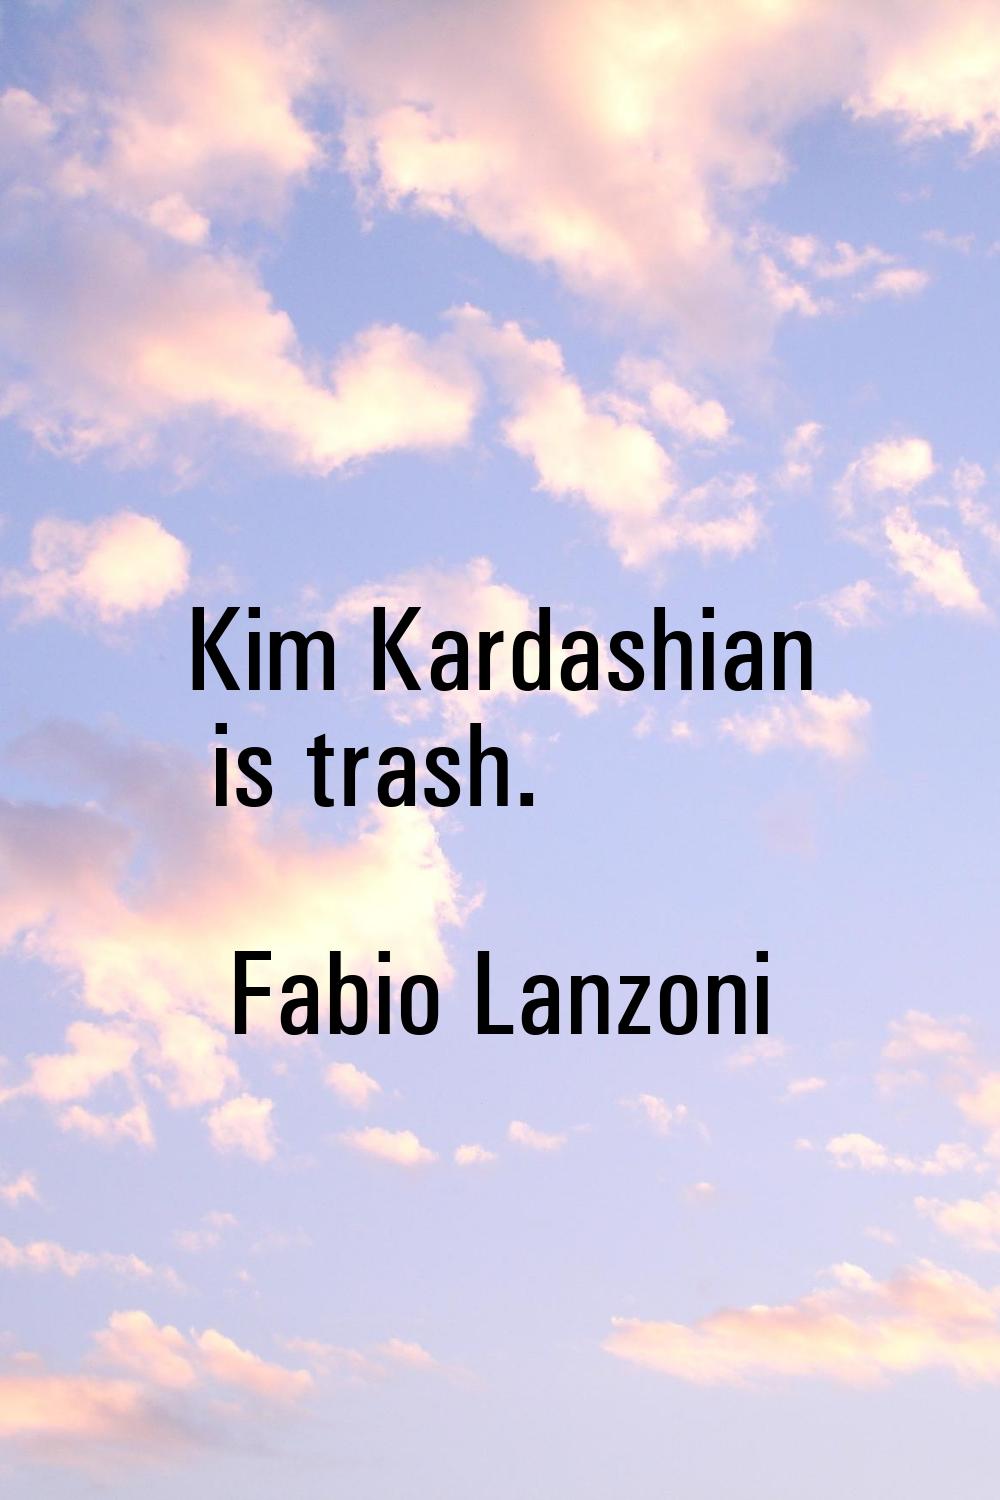 Kim Kardashian is trash.